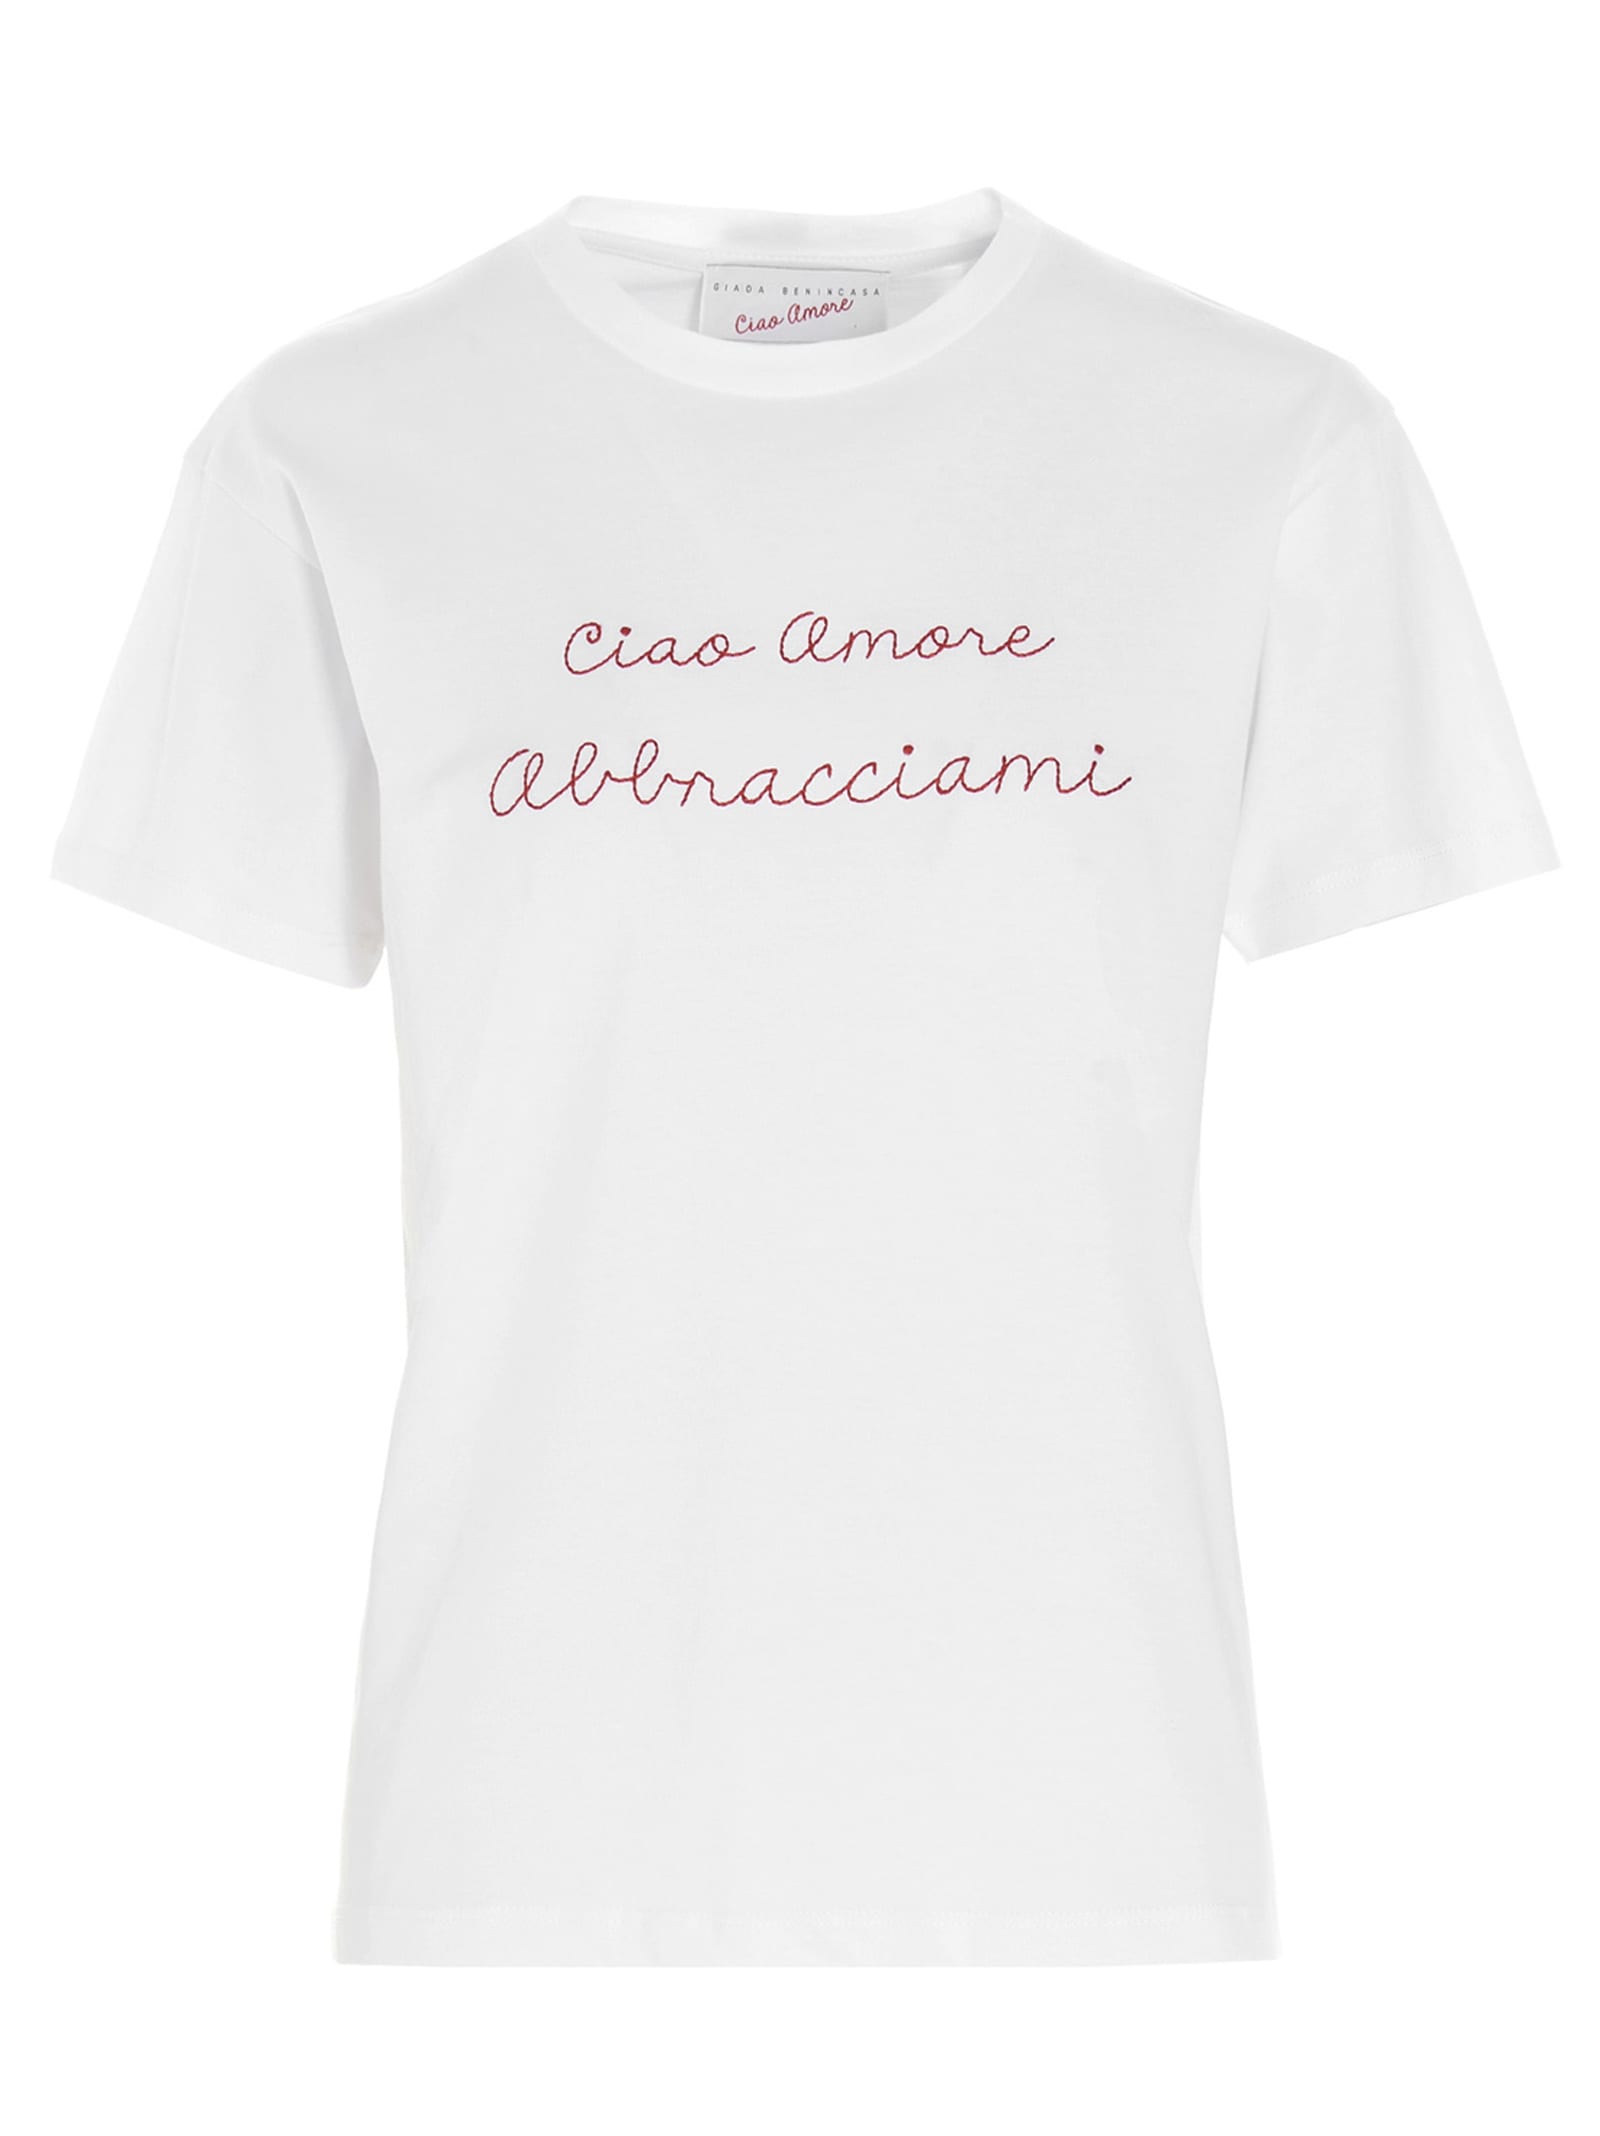 Giada Benincasa Ciao Amore Abbracciami T-shirt